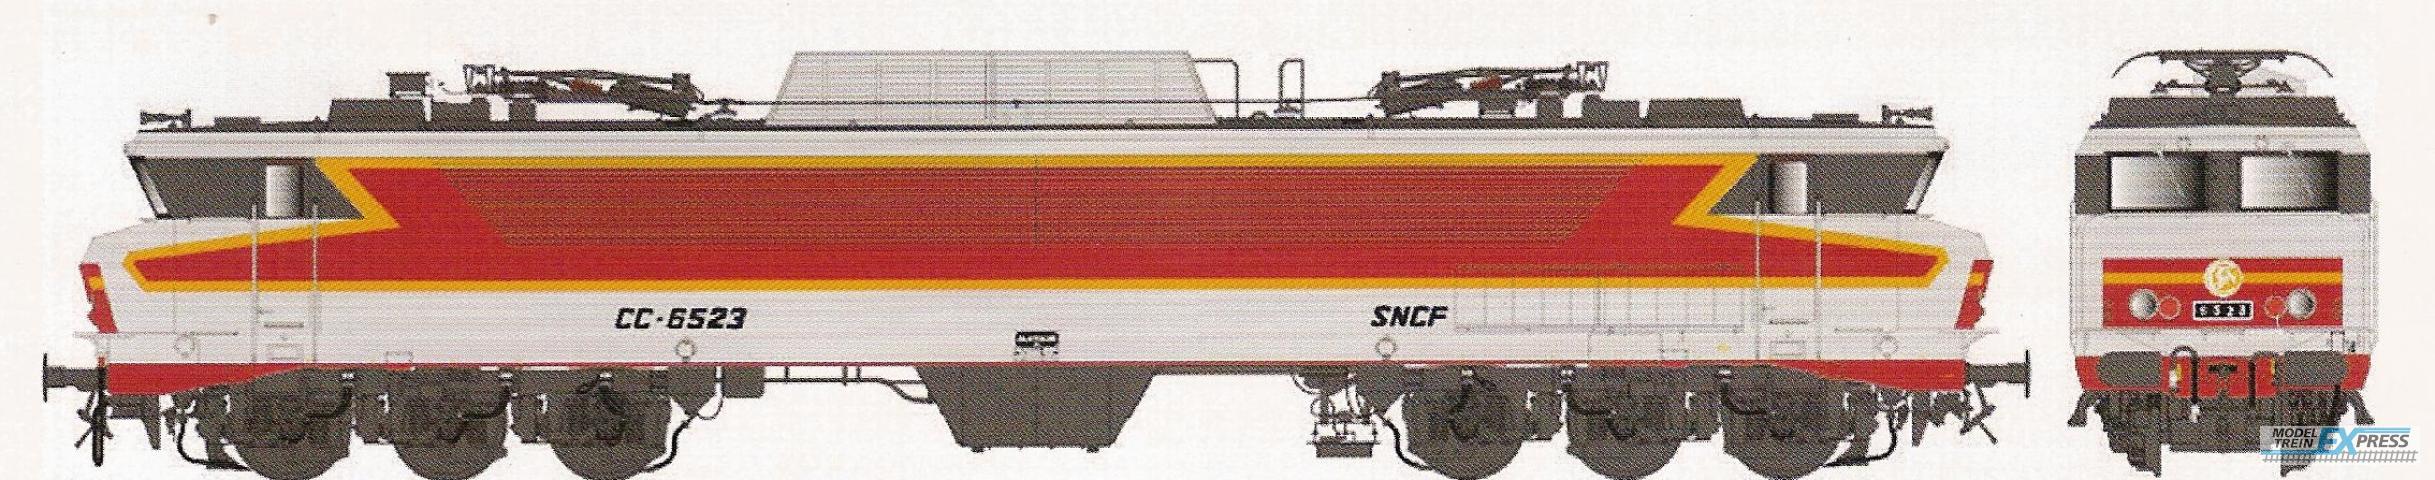 LS Models 10322 CC 6523, metaalgrijs/rood/oranje, TEE, platen, Beffara logo, zuid west, 200 km/h  /  Ep. IV  /  SNCF  /  HO  /  DC  /  1 P.